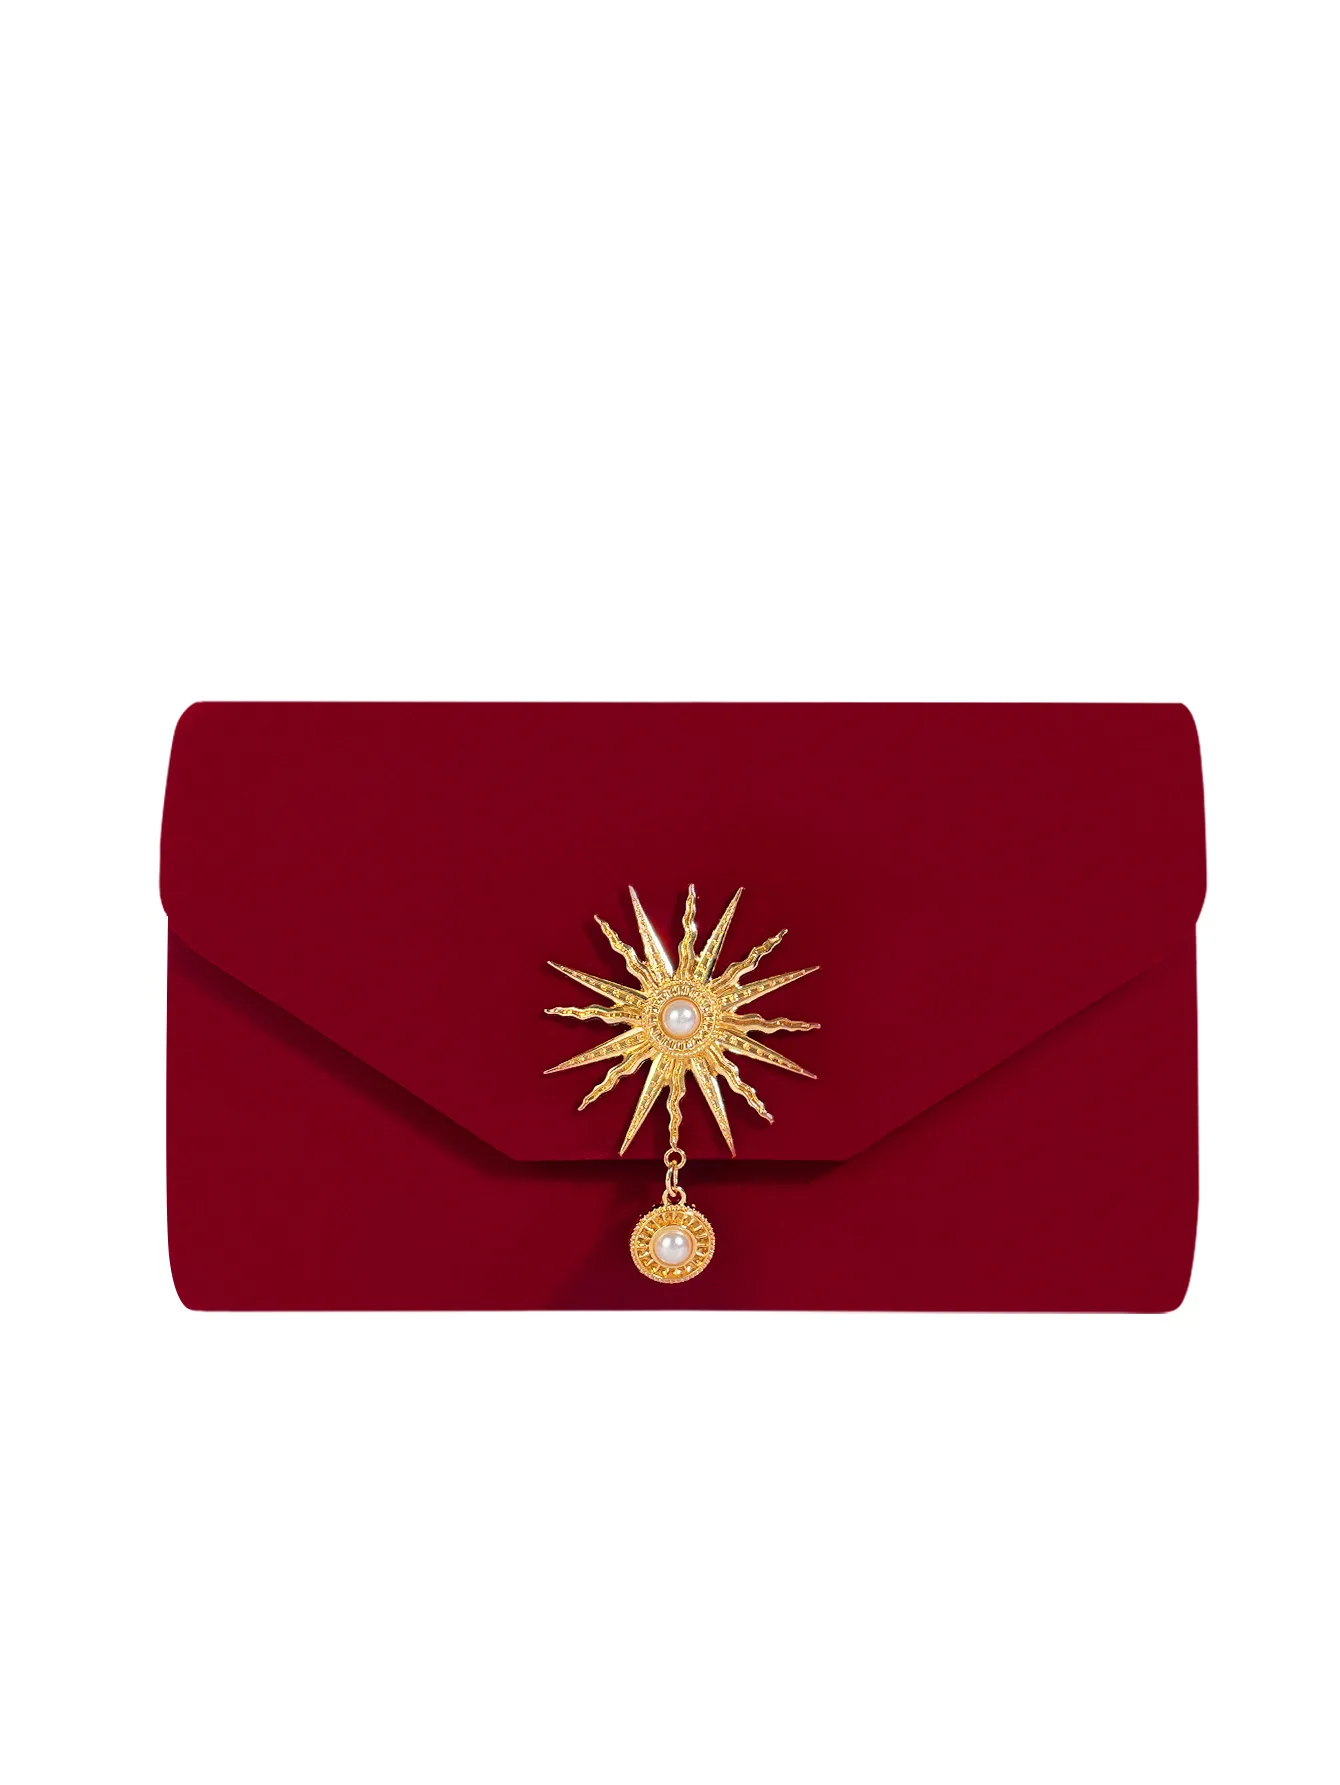 Women Velour Clutch Handbag with Pearl Golden Floral Envelope Wedding Br... - $32.24